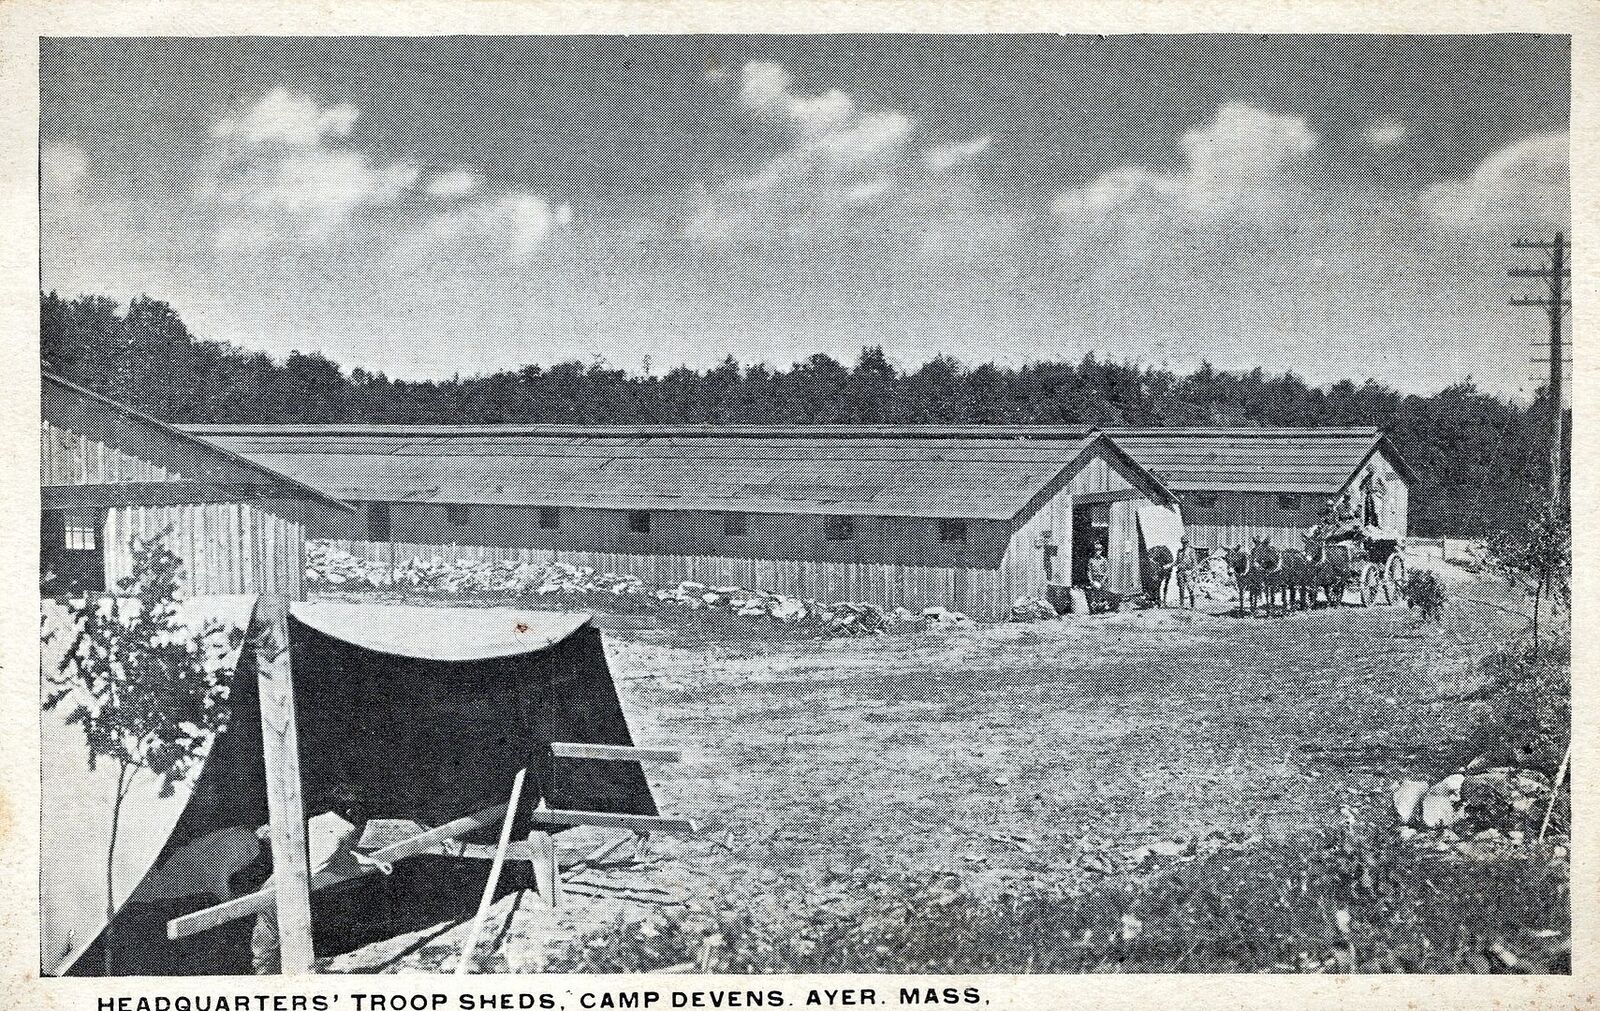 AYER MA - Camp Devens Headquarters Troop Sheds Postcard